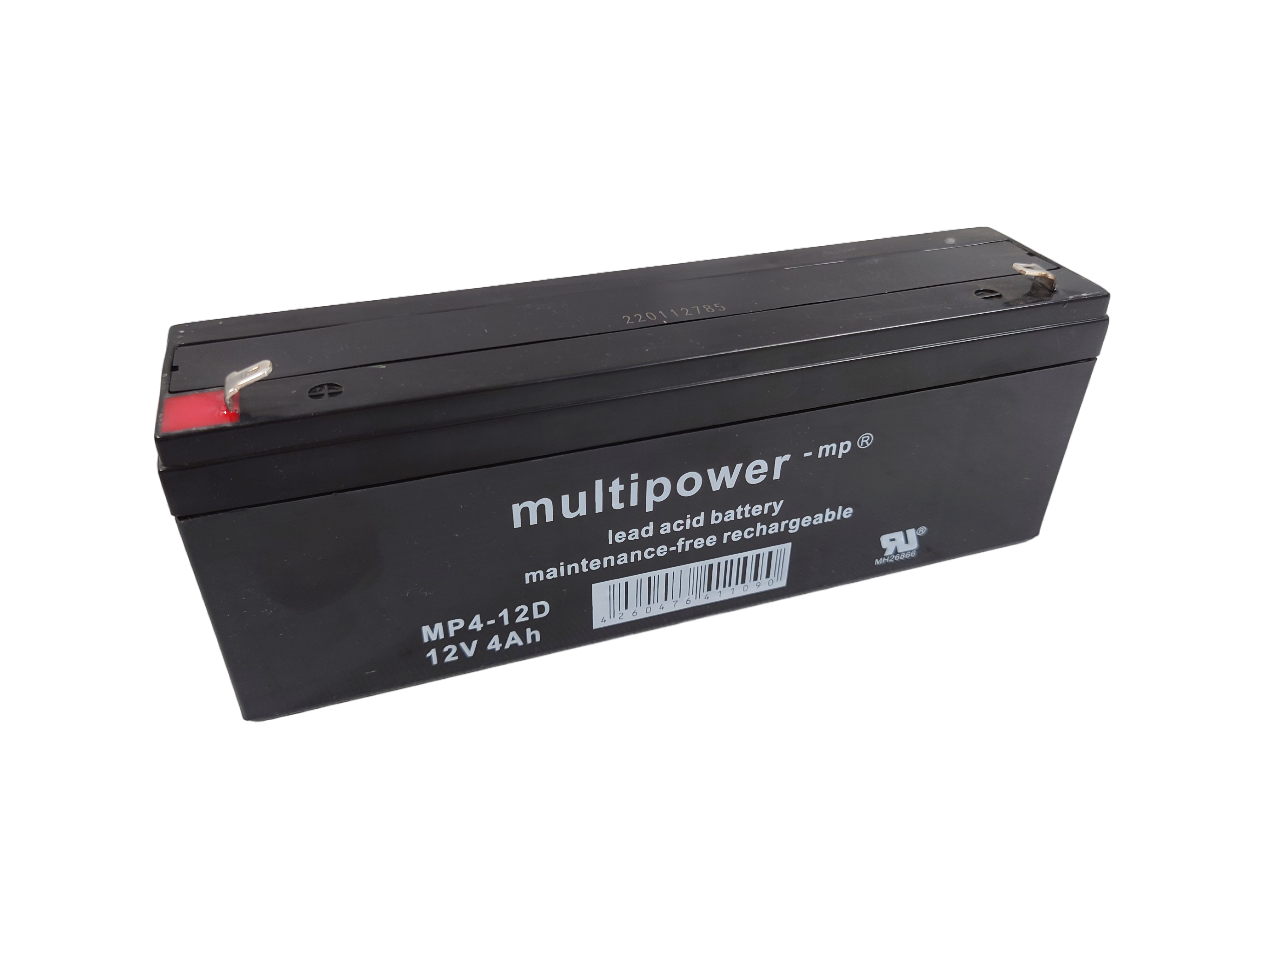 Multipower MP 4-12D VdS